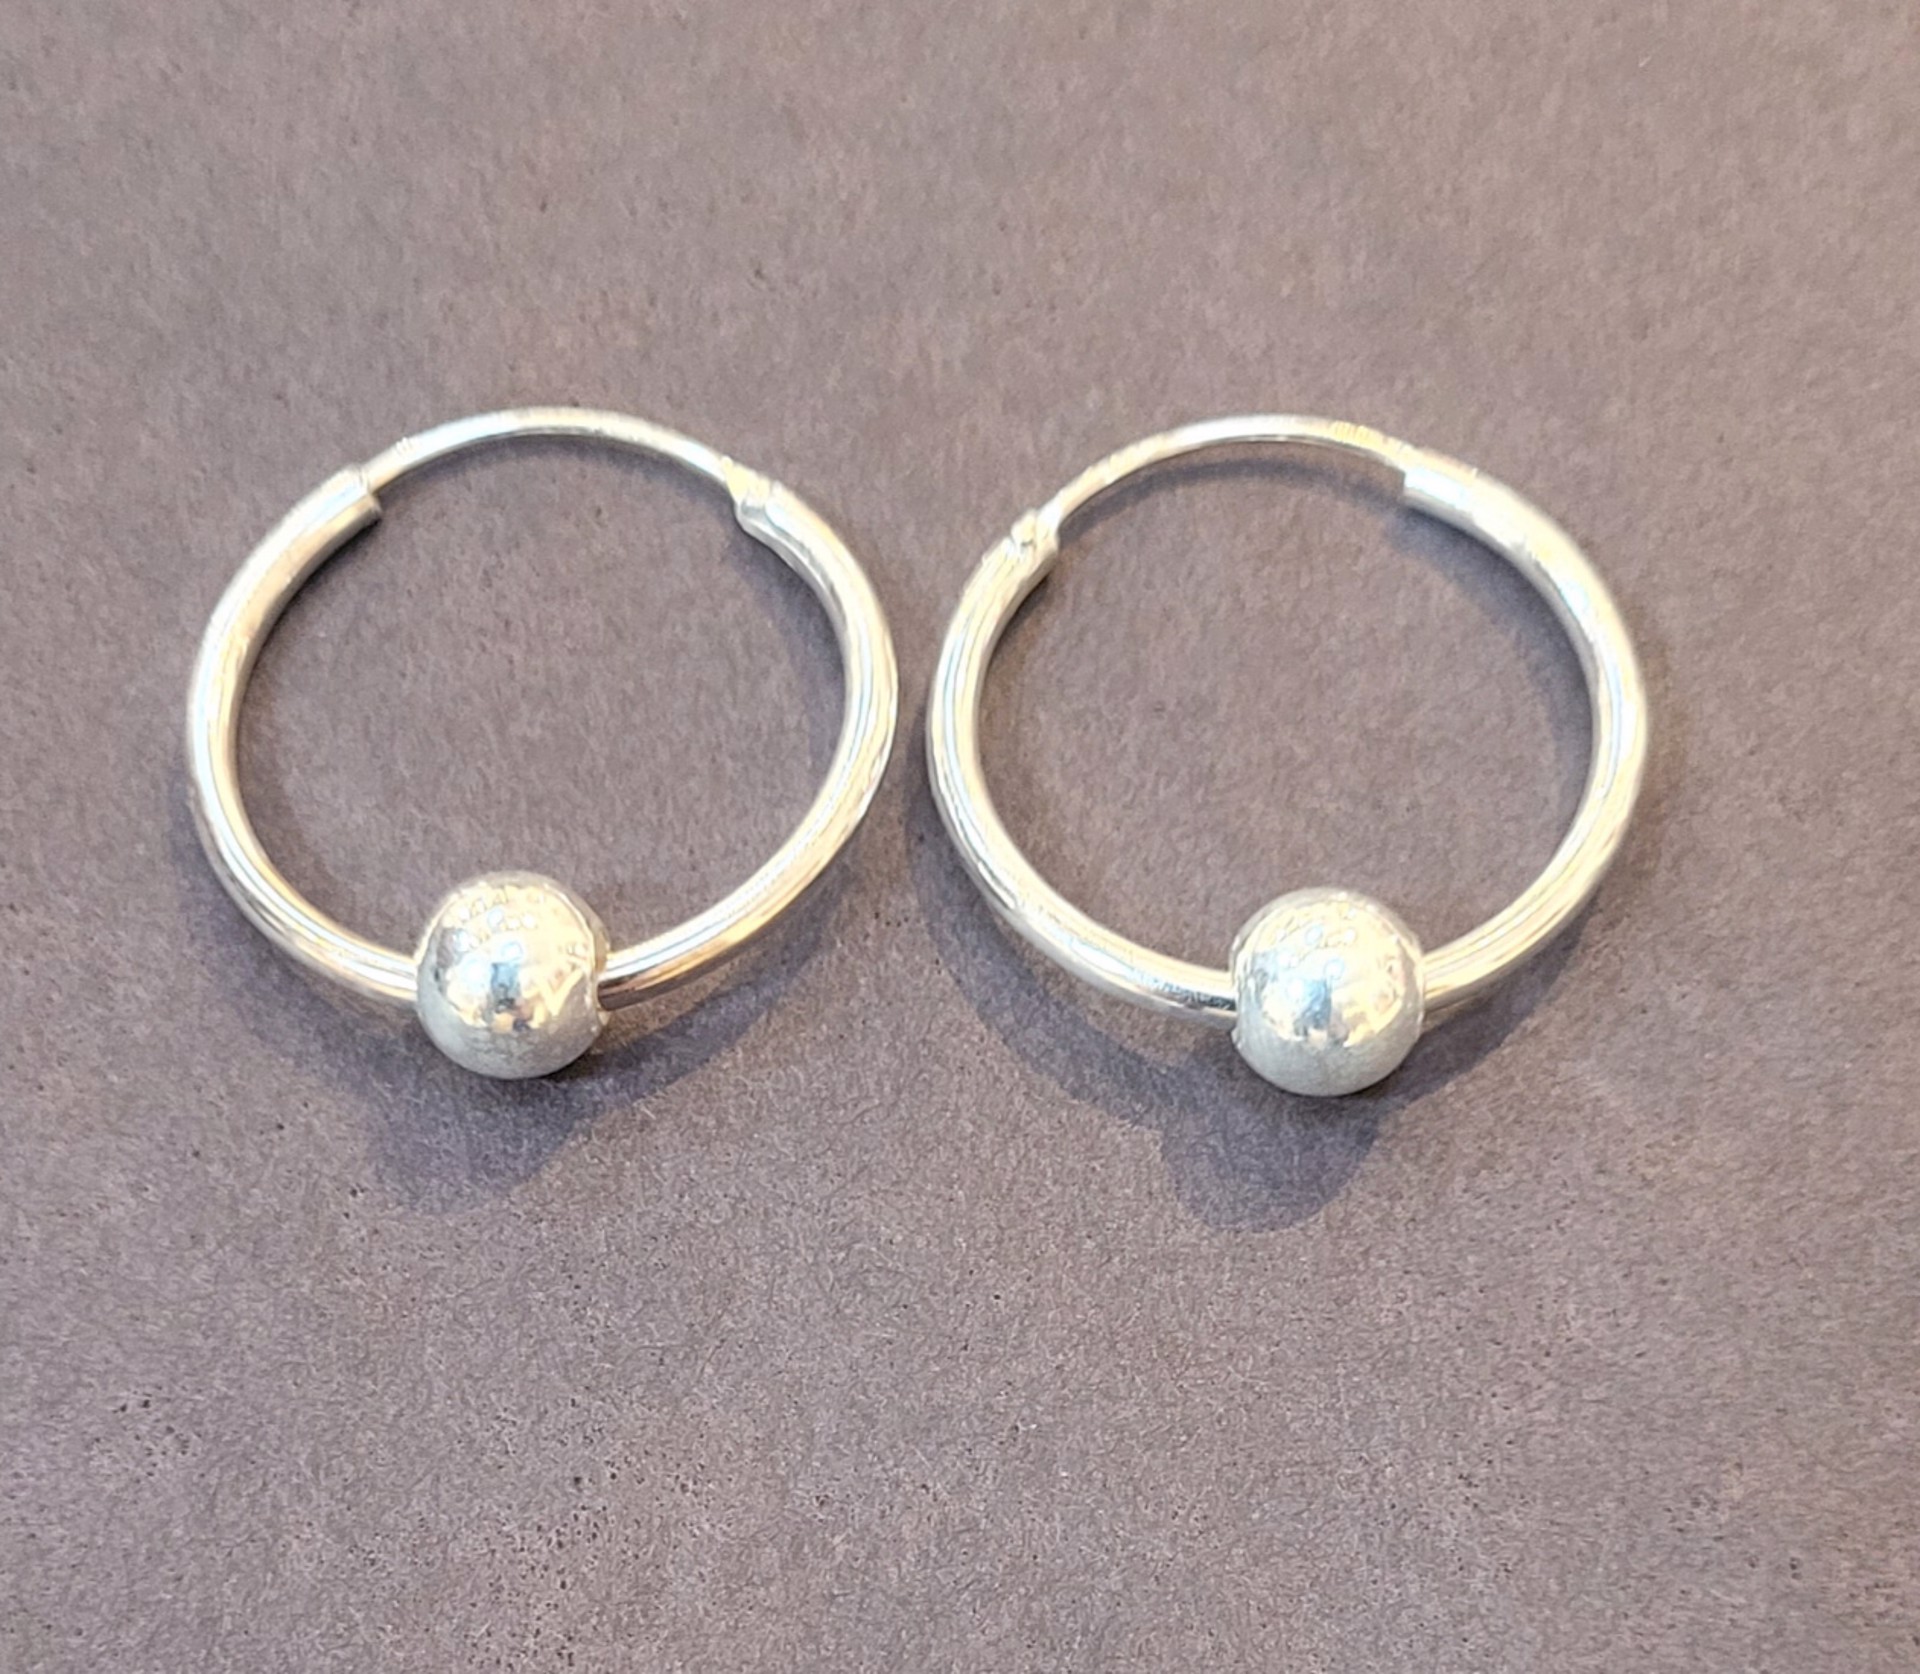 Earrings -  20 mm Hoop with 6mm Bead in Sterling Silver by Indigo Desert Ranch - Jewelry